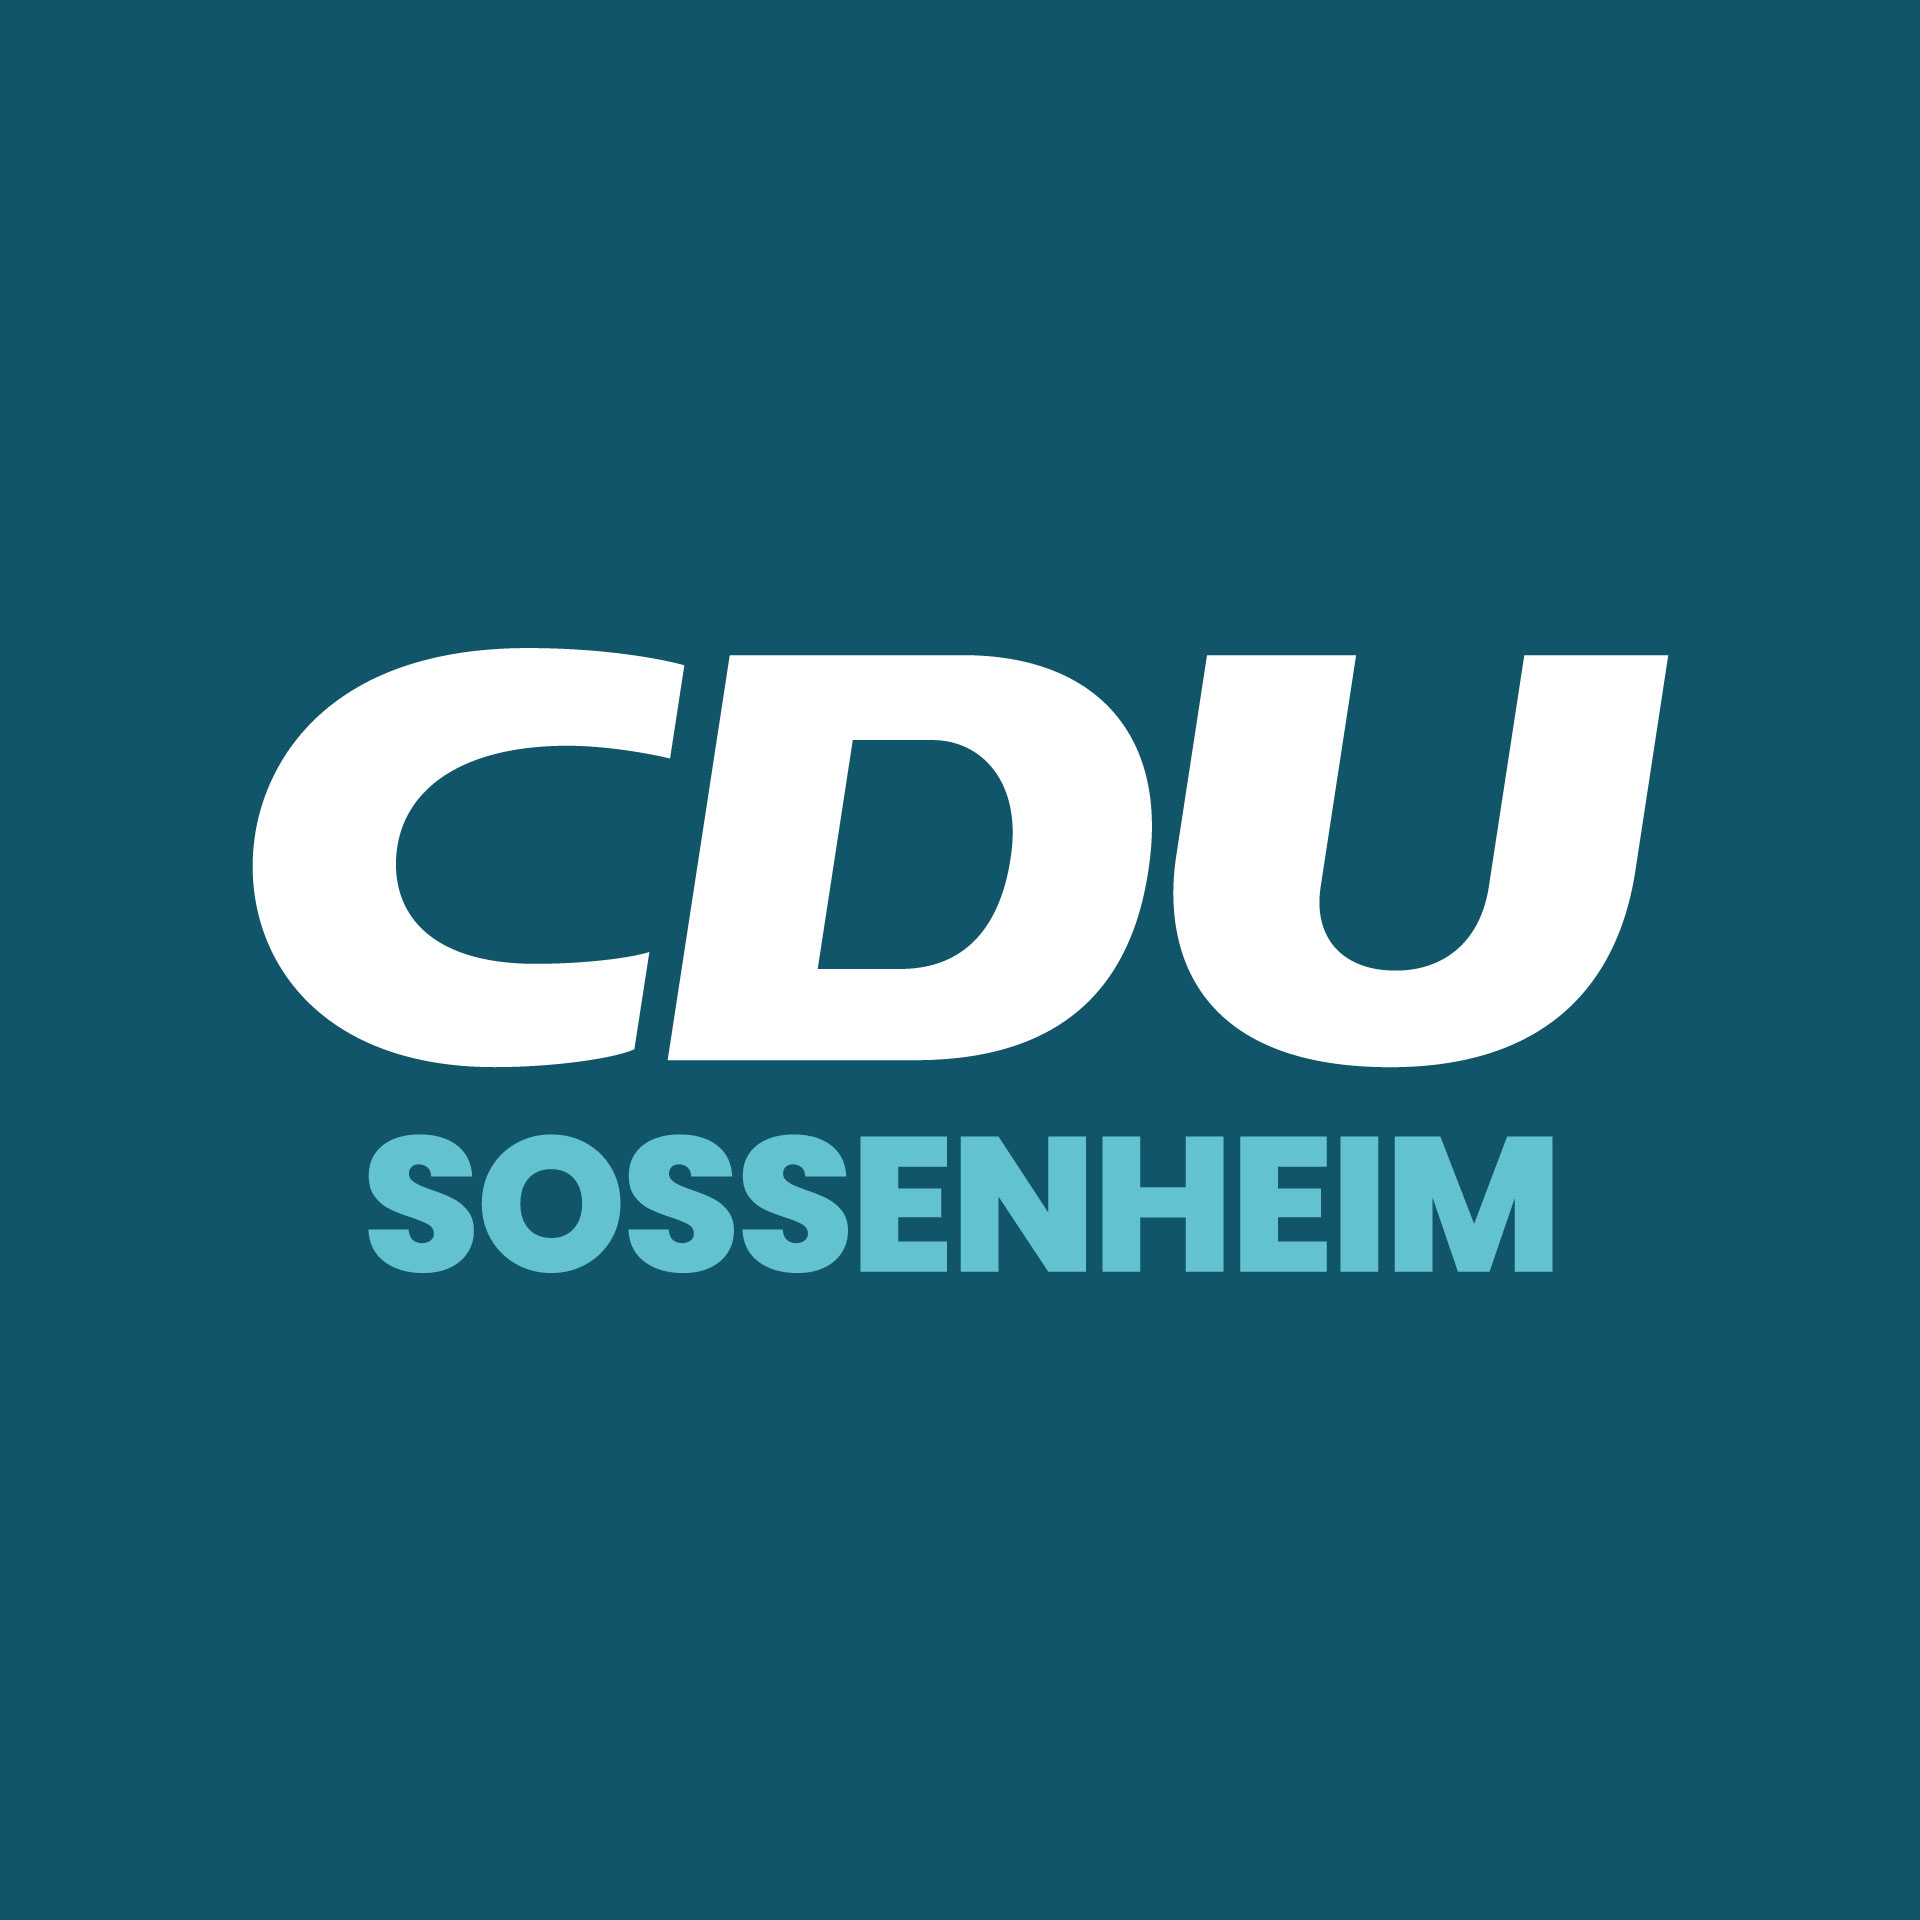 (c) Cdu-sossenheim.de